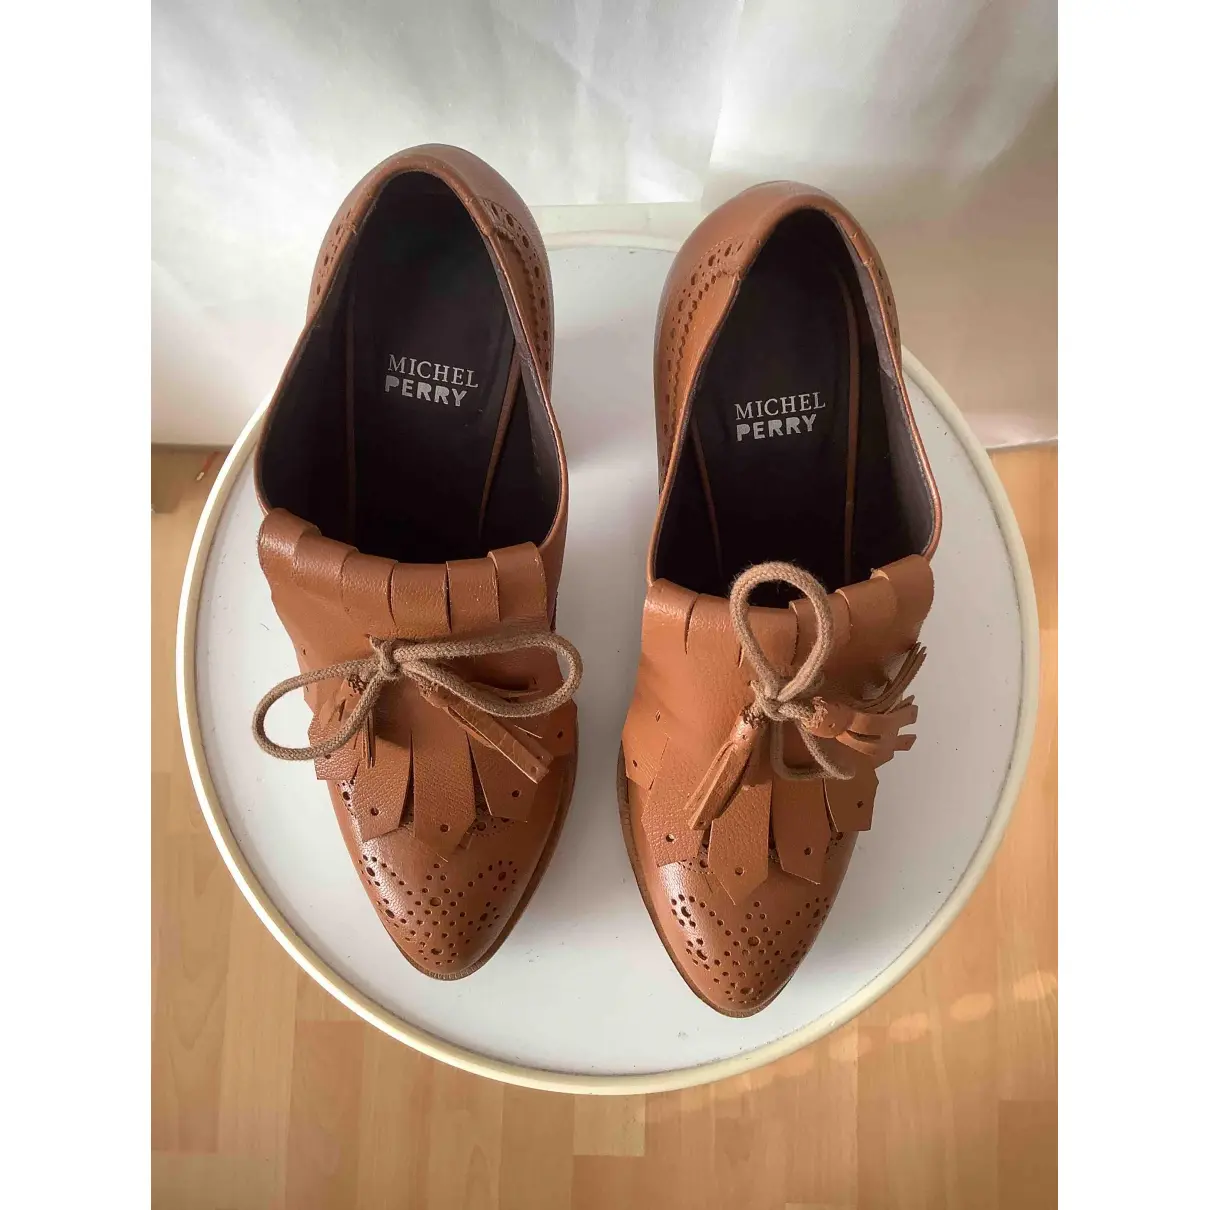 Buy Michel Perry Leather heels online